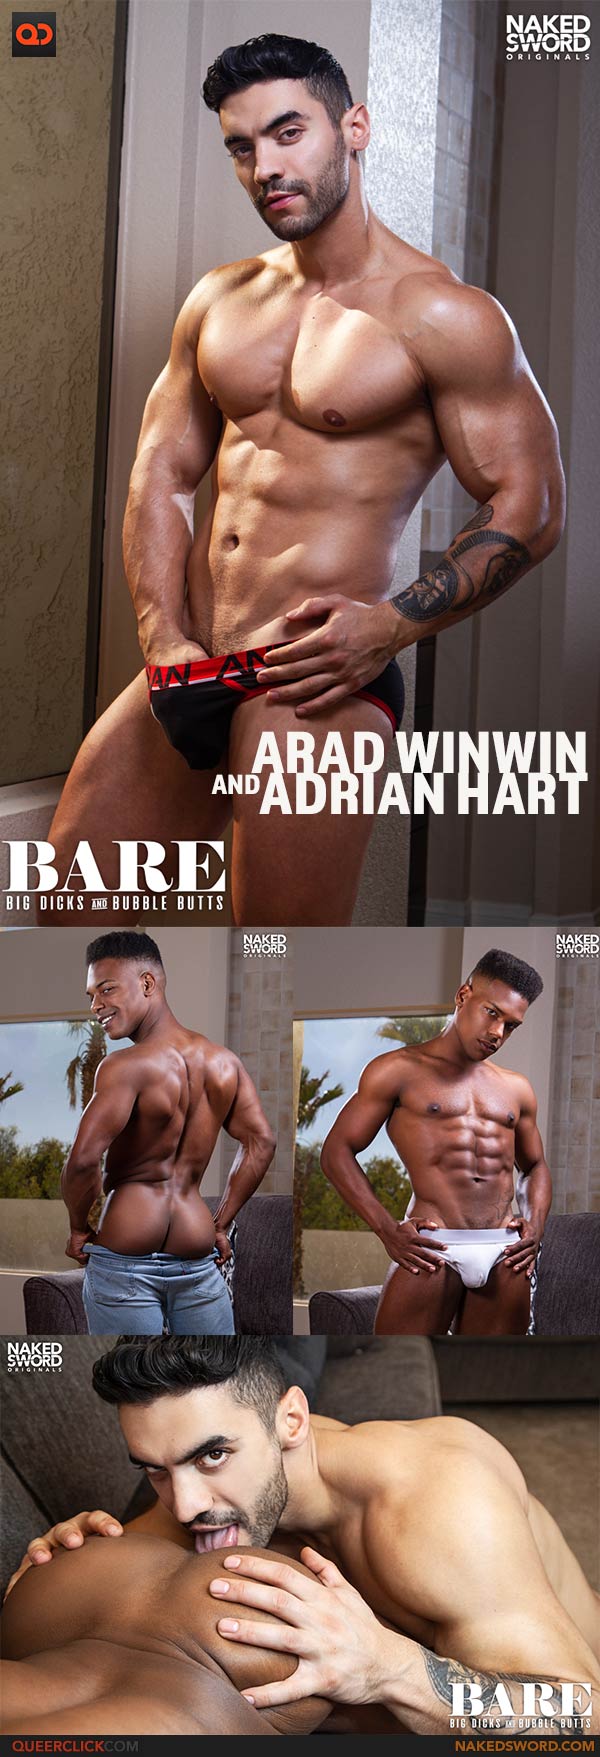 NakedSword: Arad Winwin and Adrian Hart